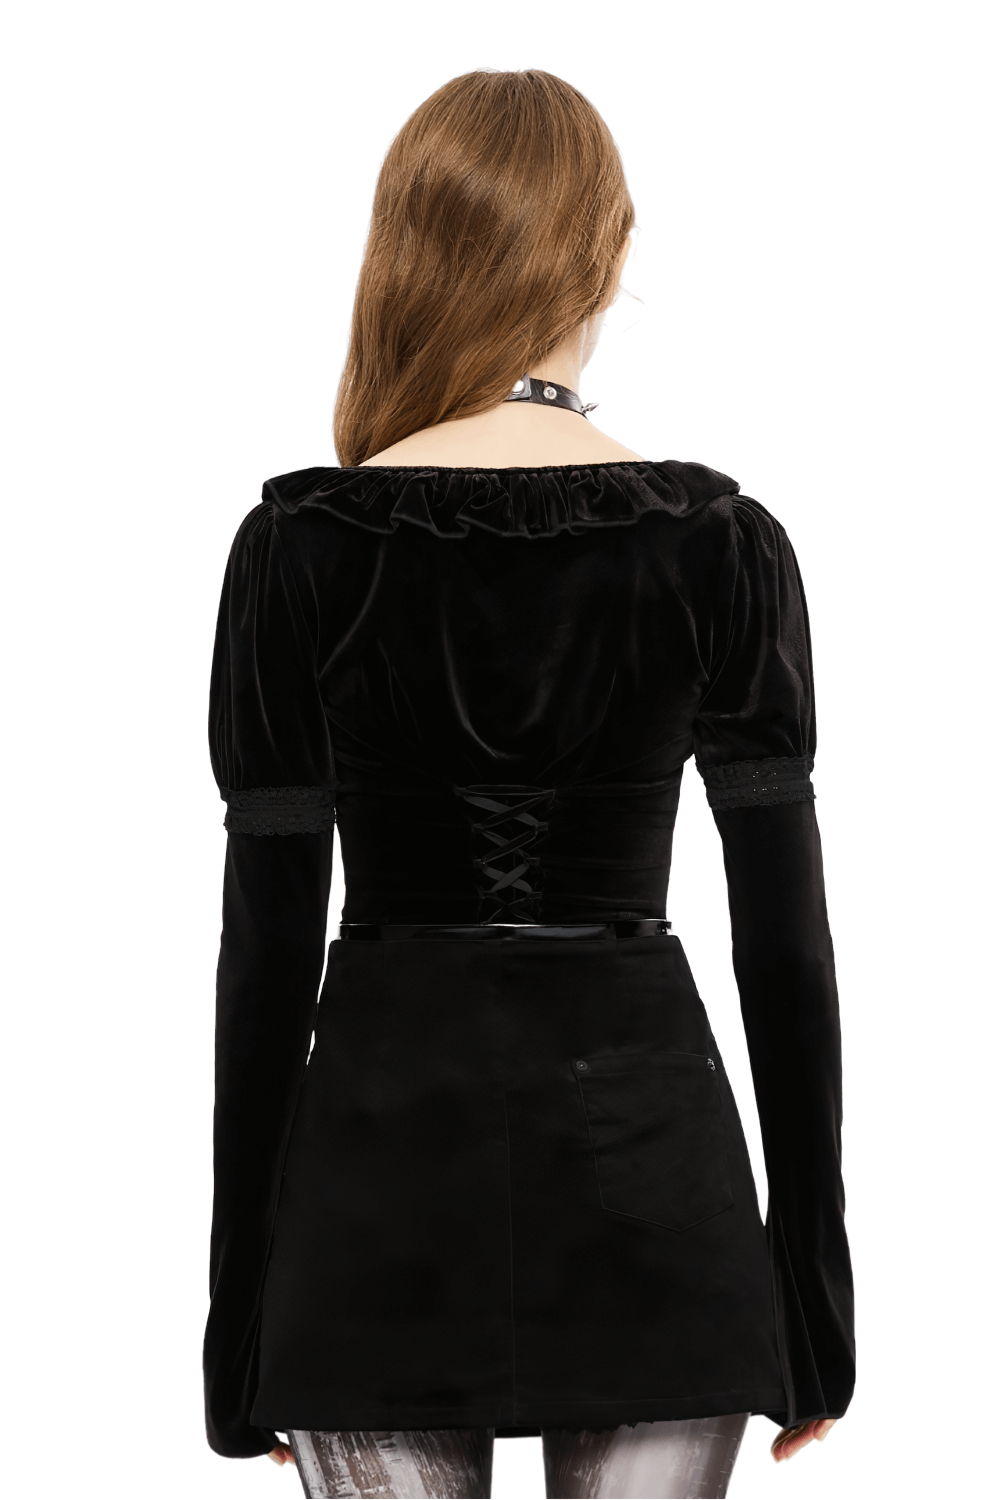 Mysterious Elegant Black Velvet Lace-Up Gothic Top